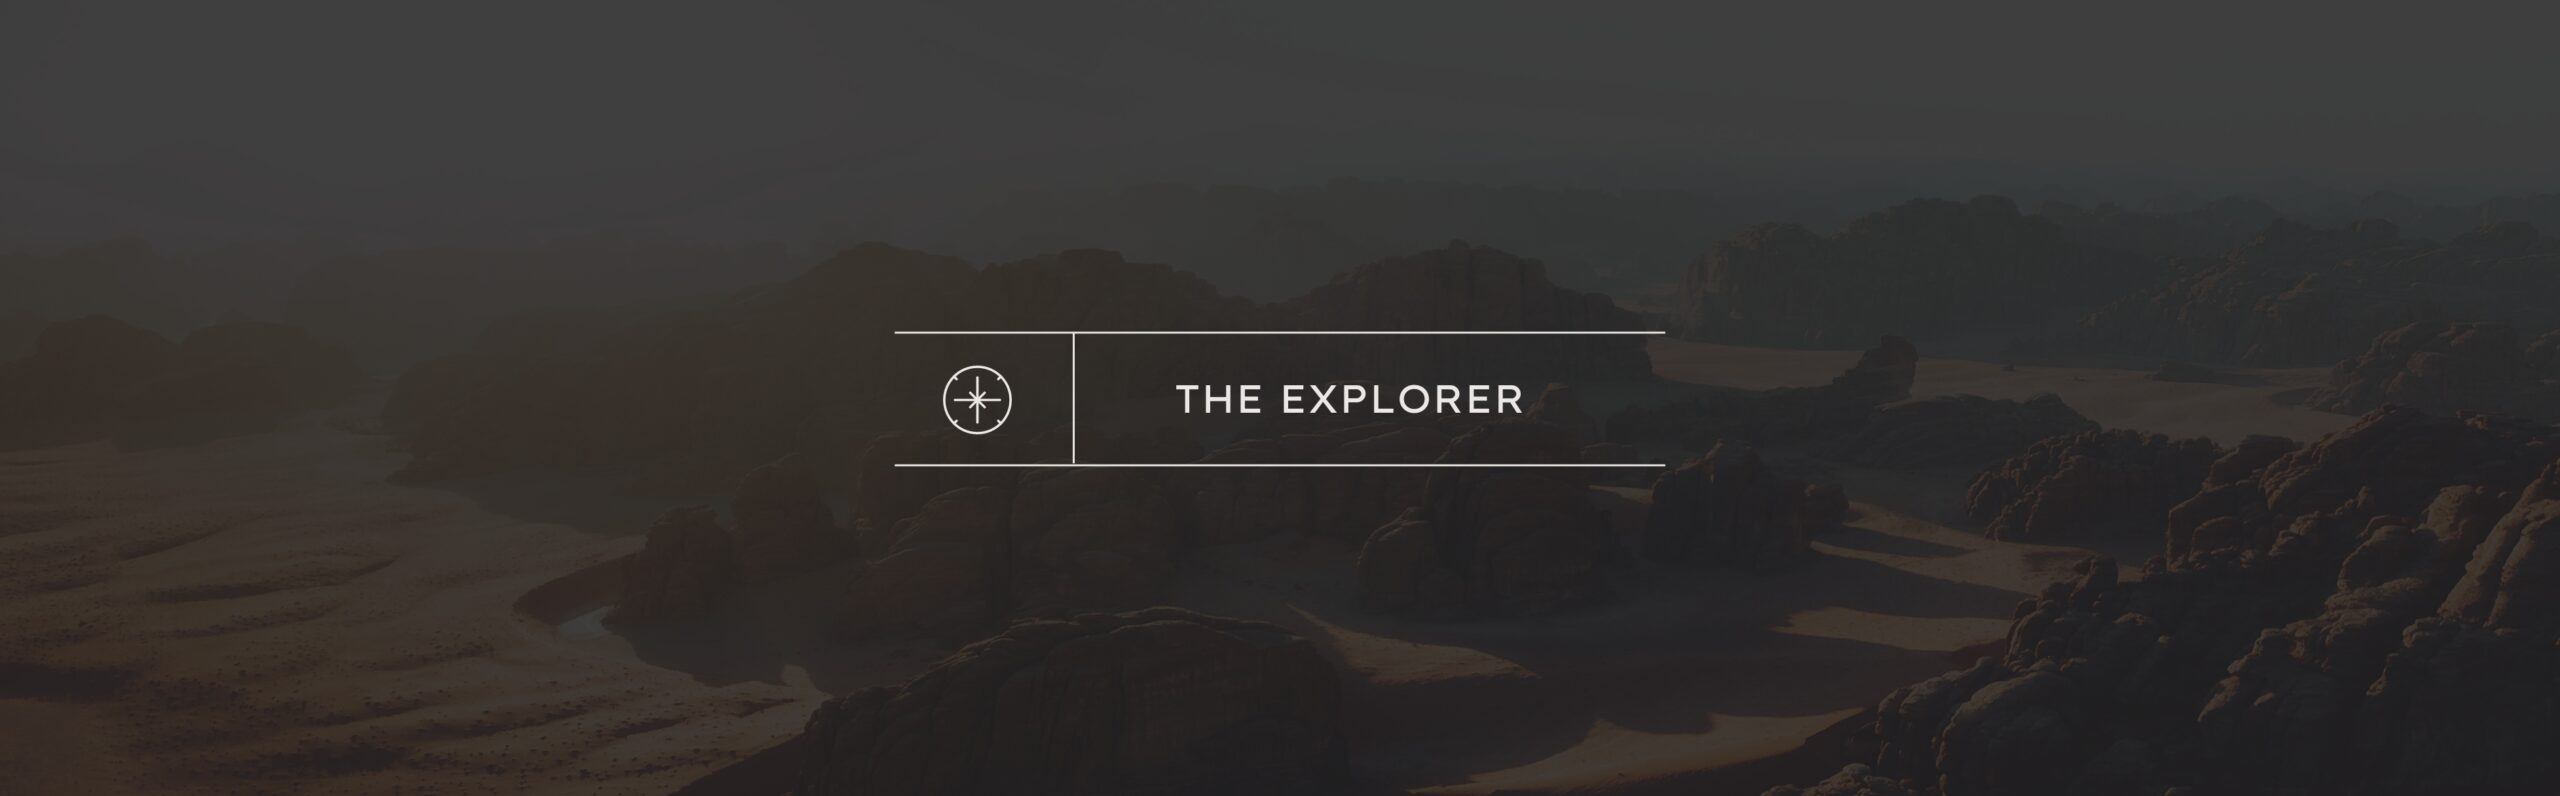 Brand Archetypes: The Explorer